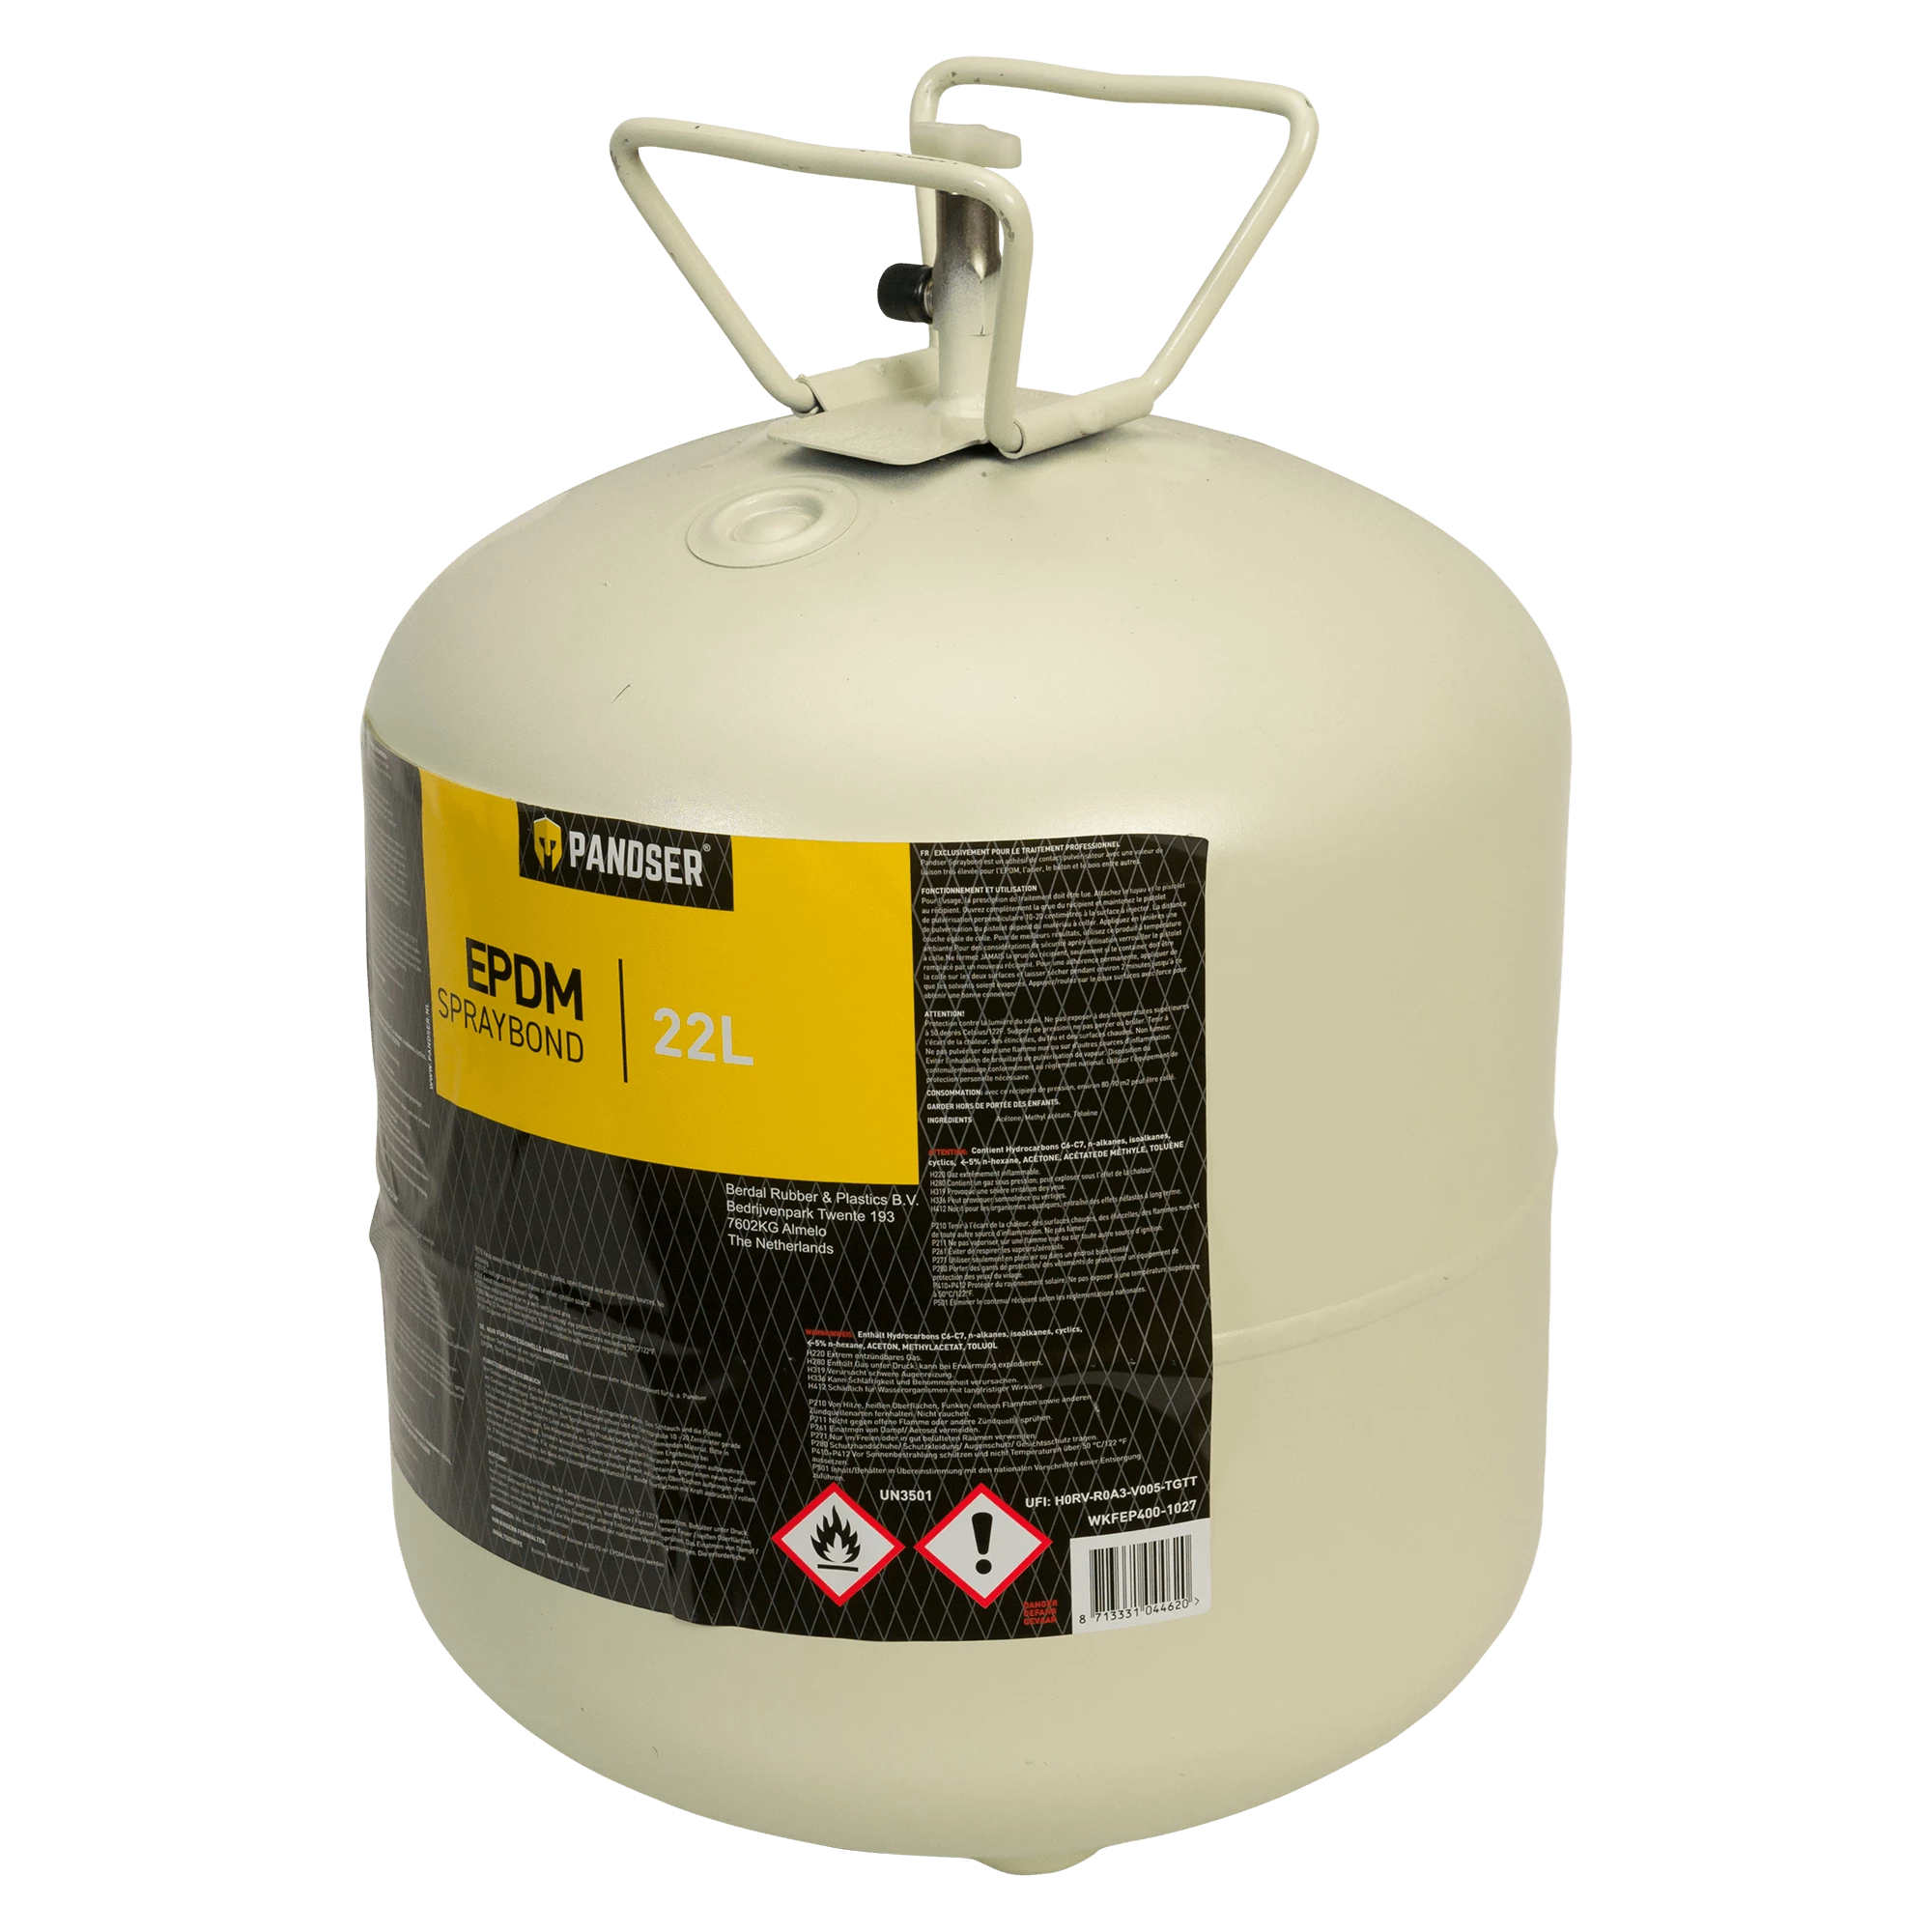 EPDM Spraybond 22 liter